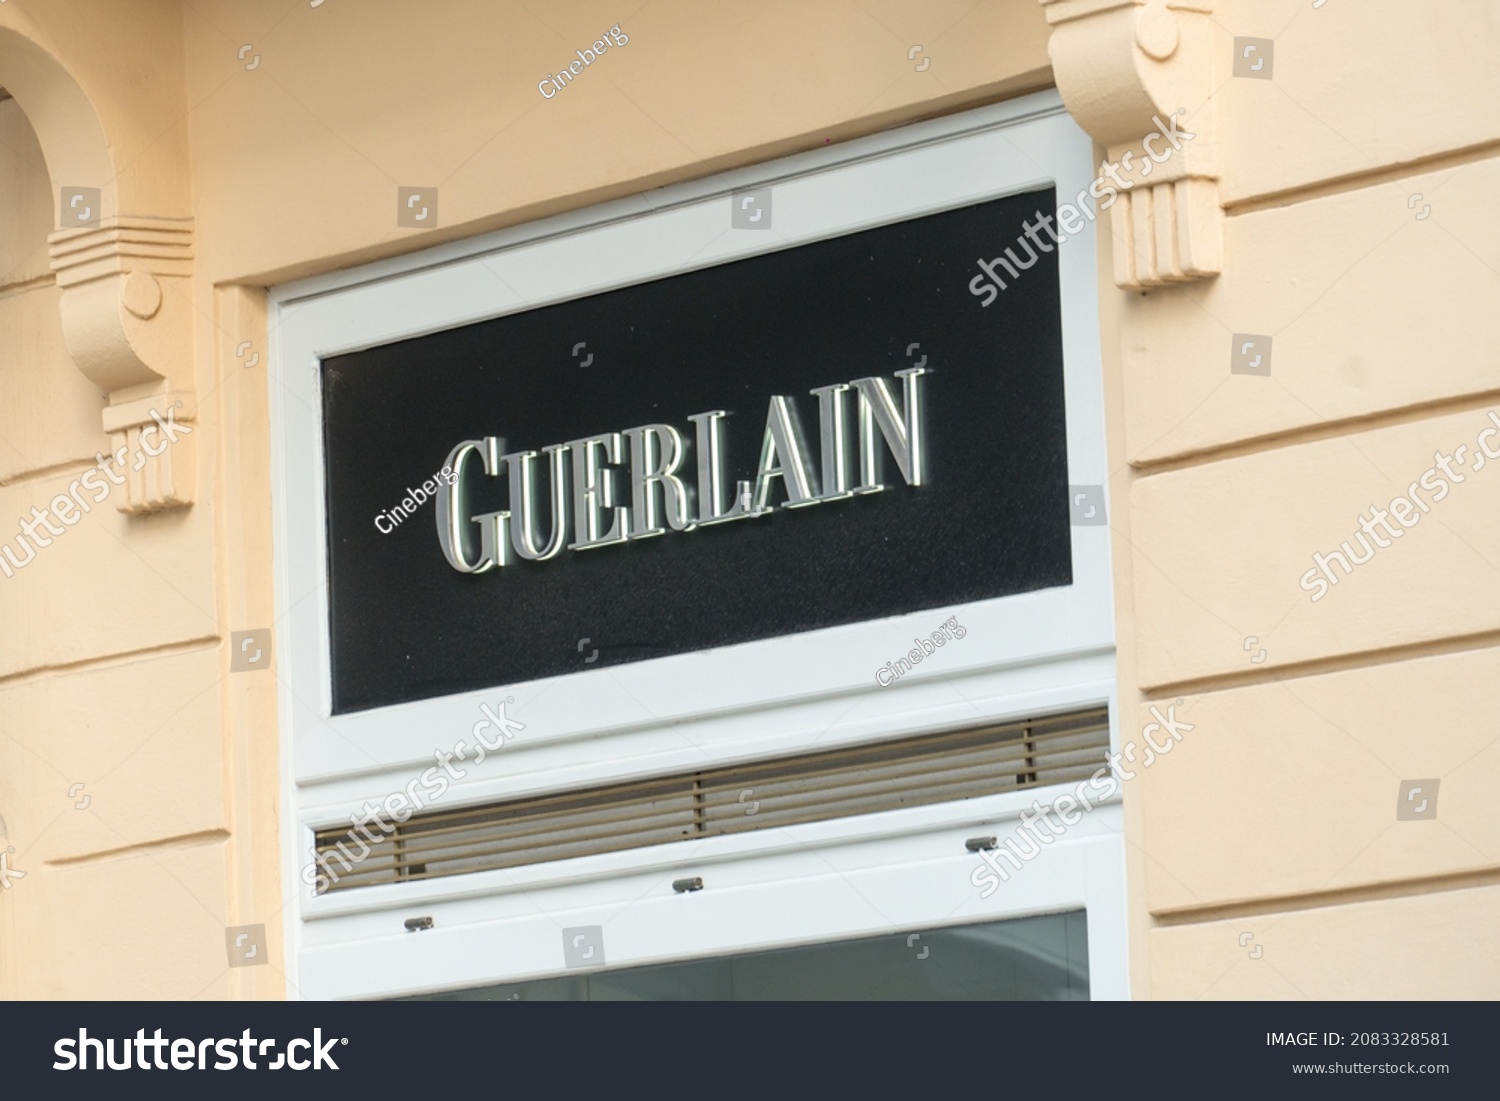 44 Guerlain logo Images, Stock Photos & Vectors | Shutterstock